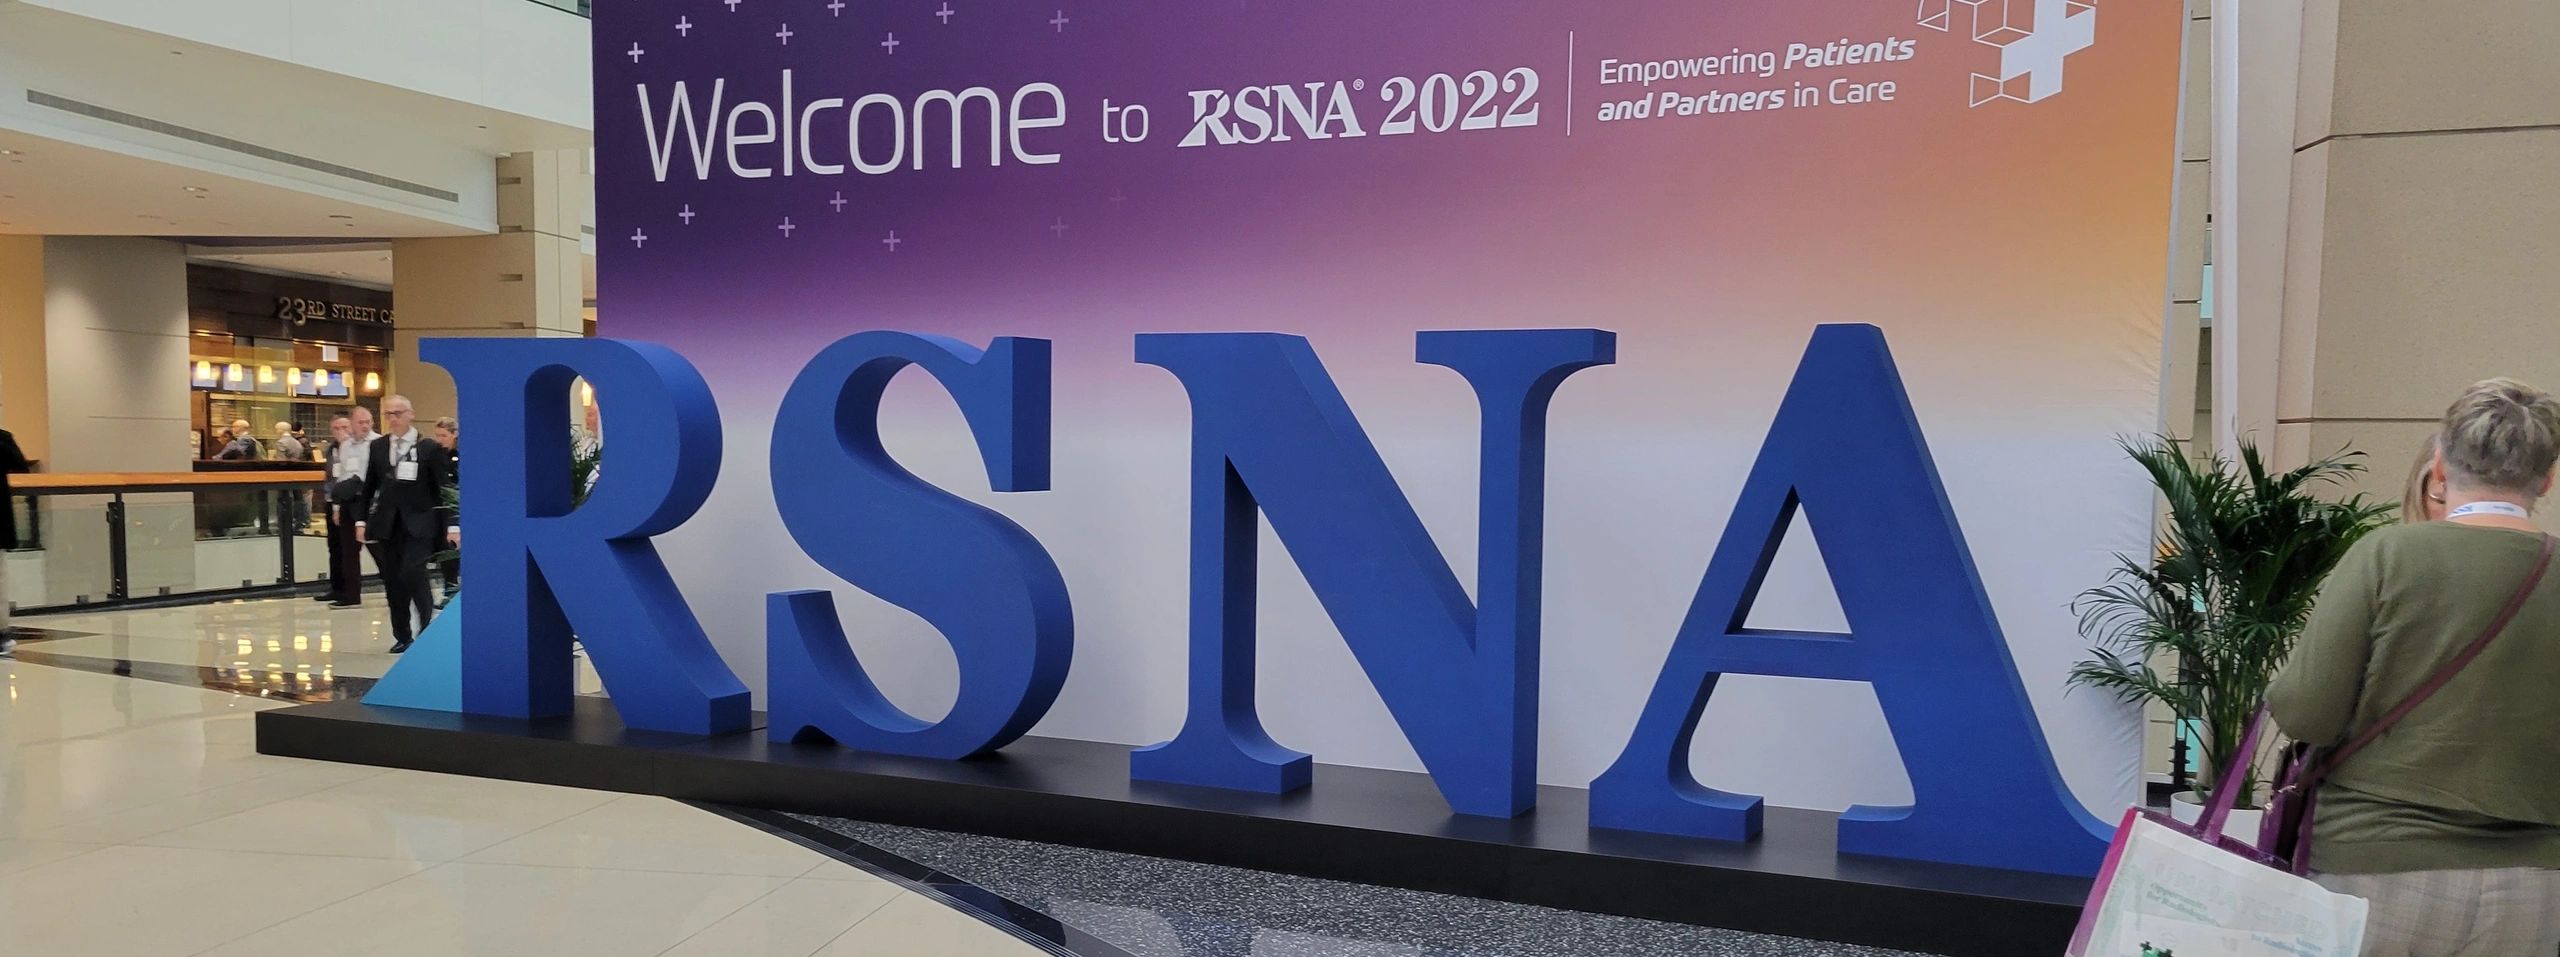 RSNA Inperson registration closes at 34K for RSNA 2022